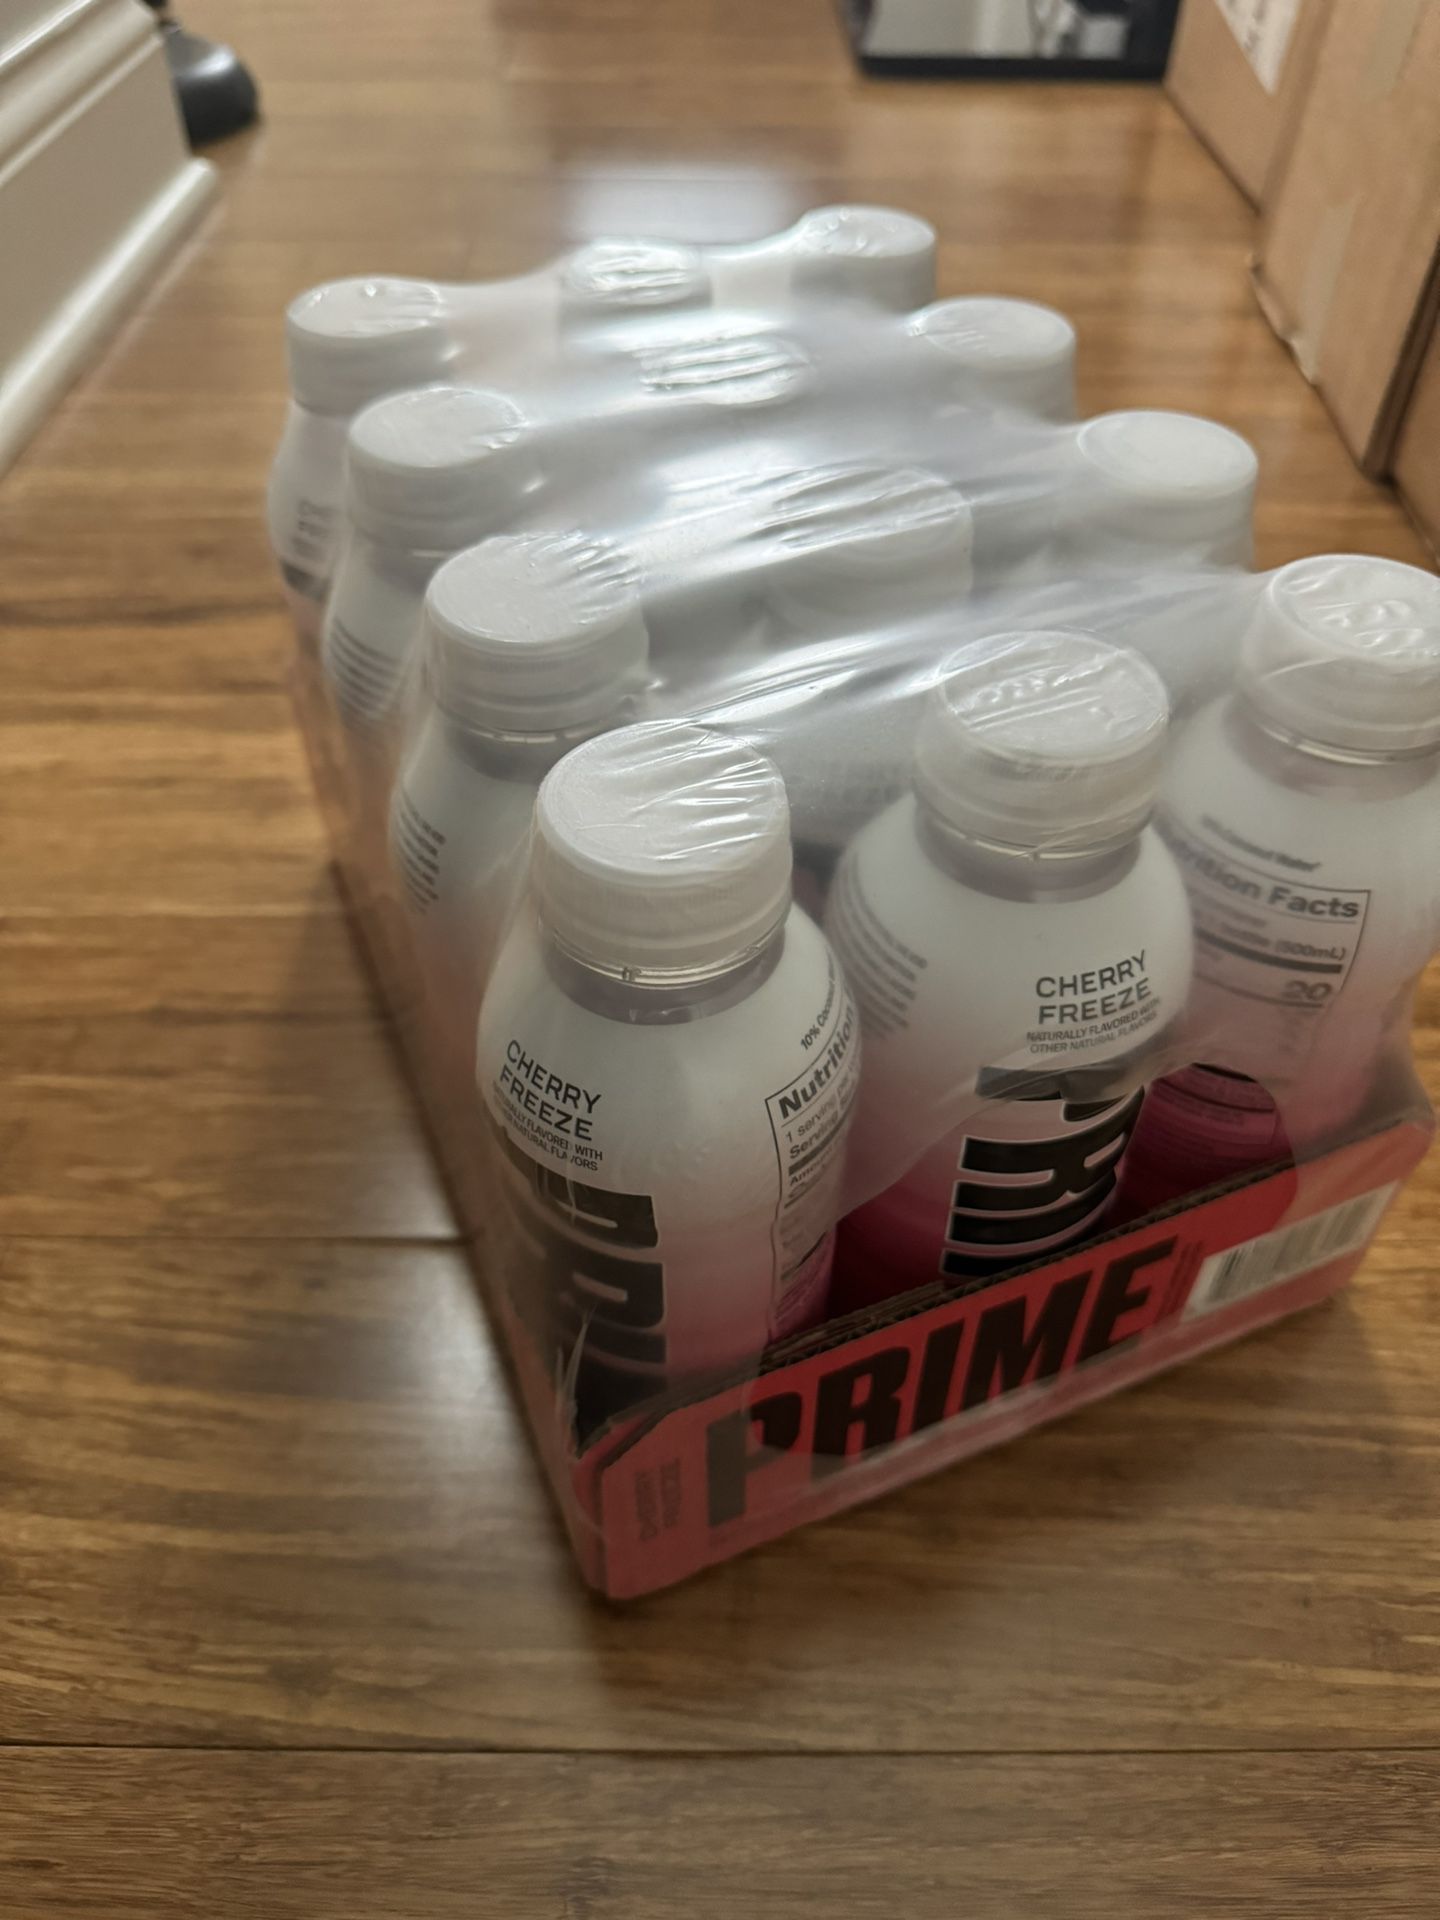 PRIME Hydration drink - Cherry freeze